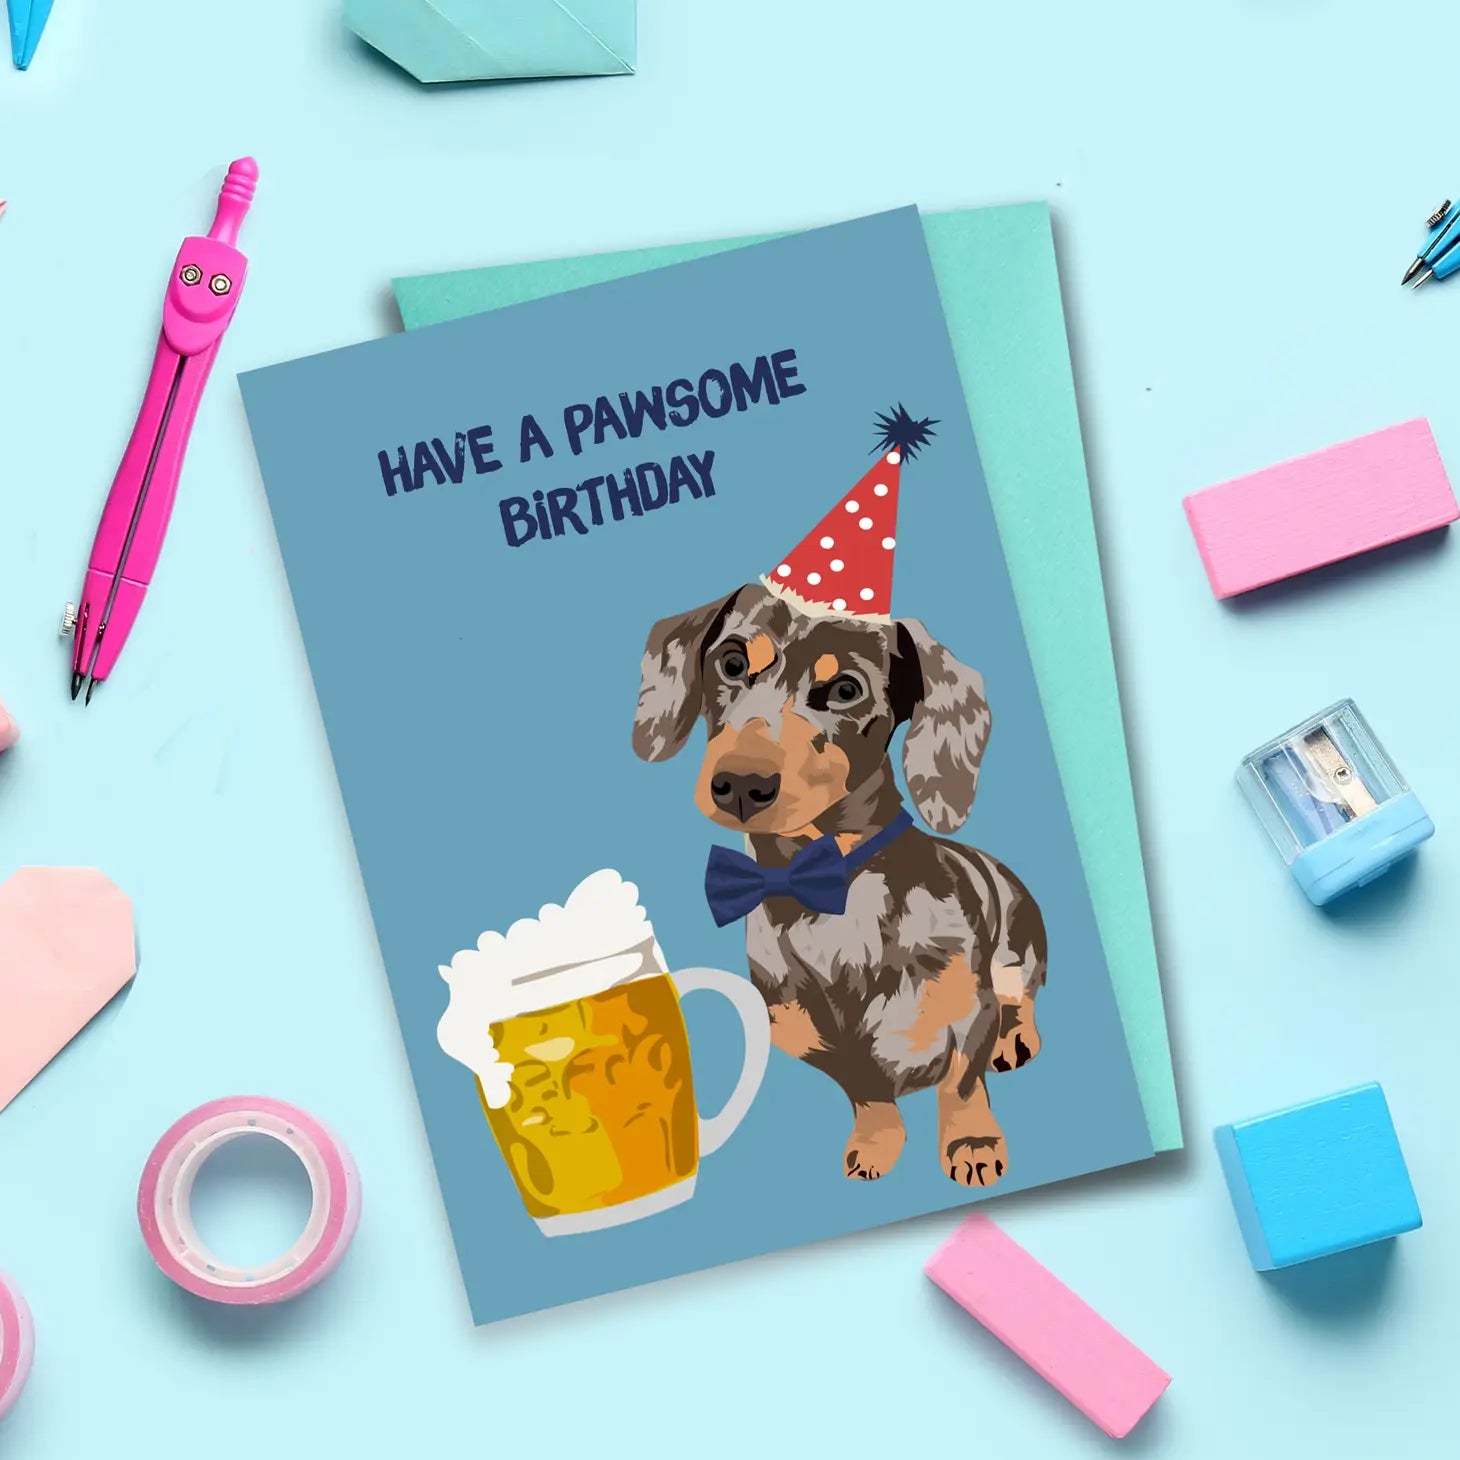 Have A Pawsome Birthday Sausage Dog Card